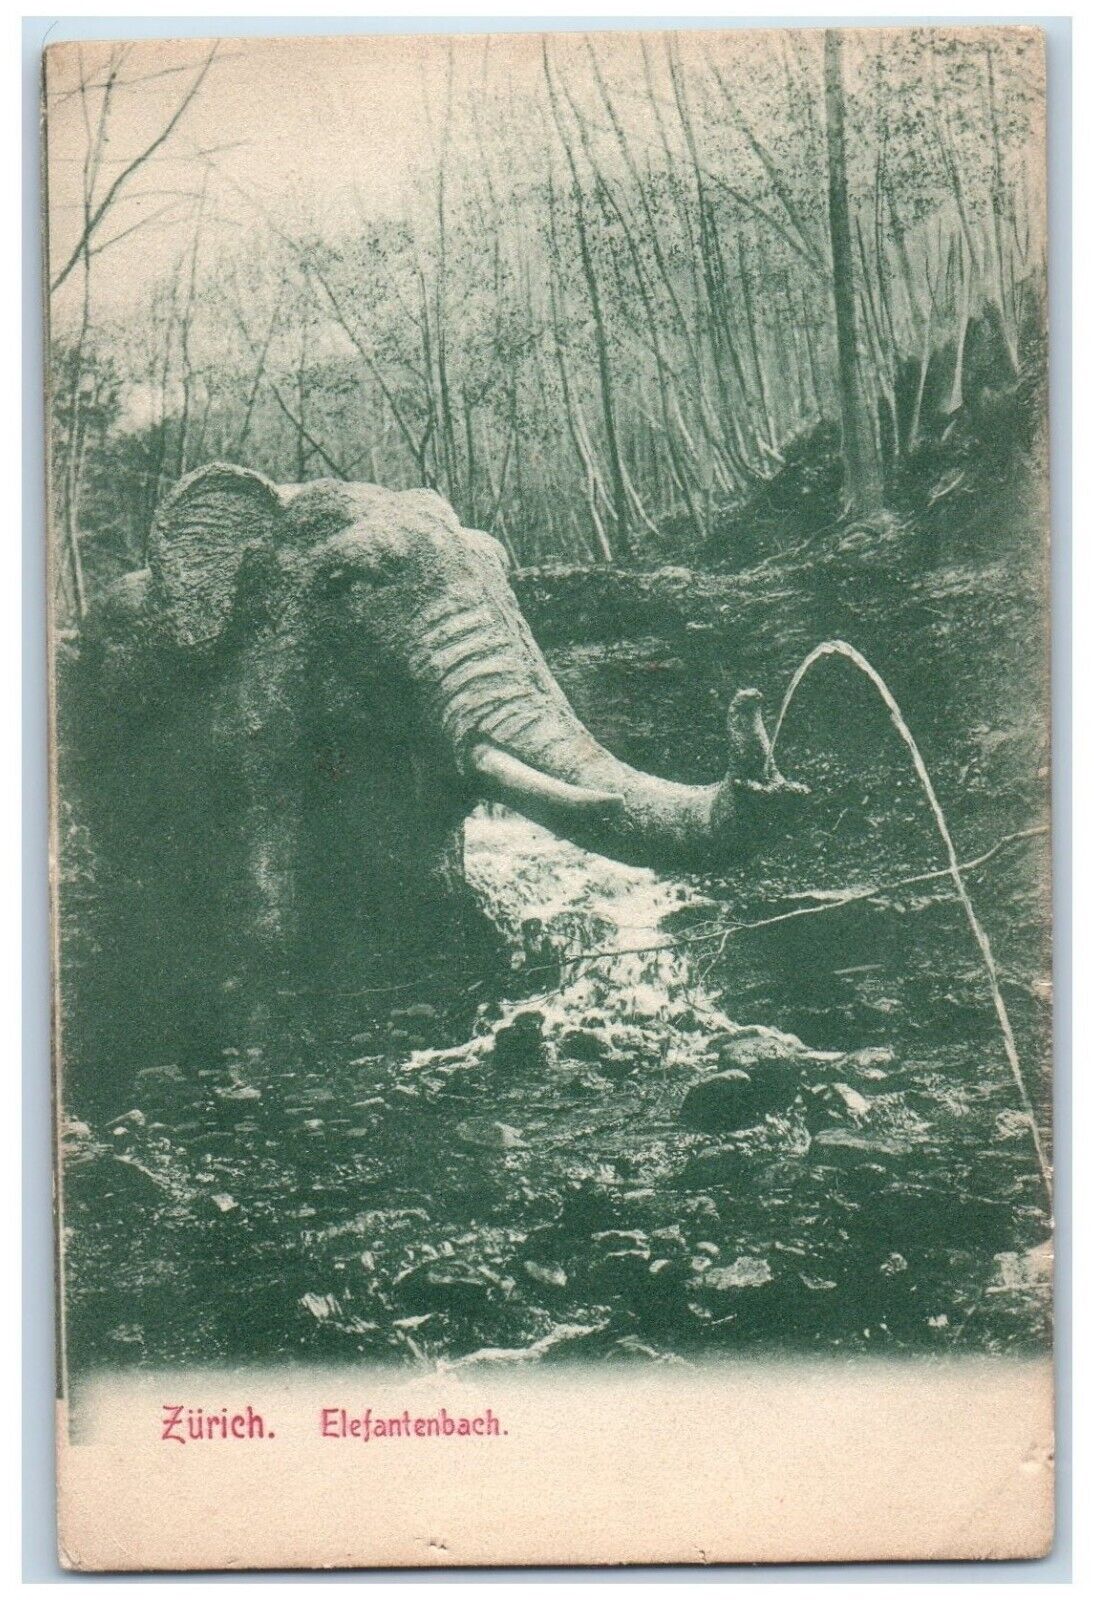 c1905 Zurich Elefantebach Elephant River Forest Rocks Vintage Antique Postcard